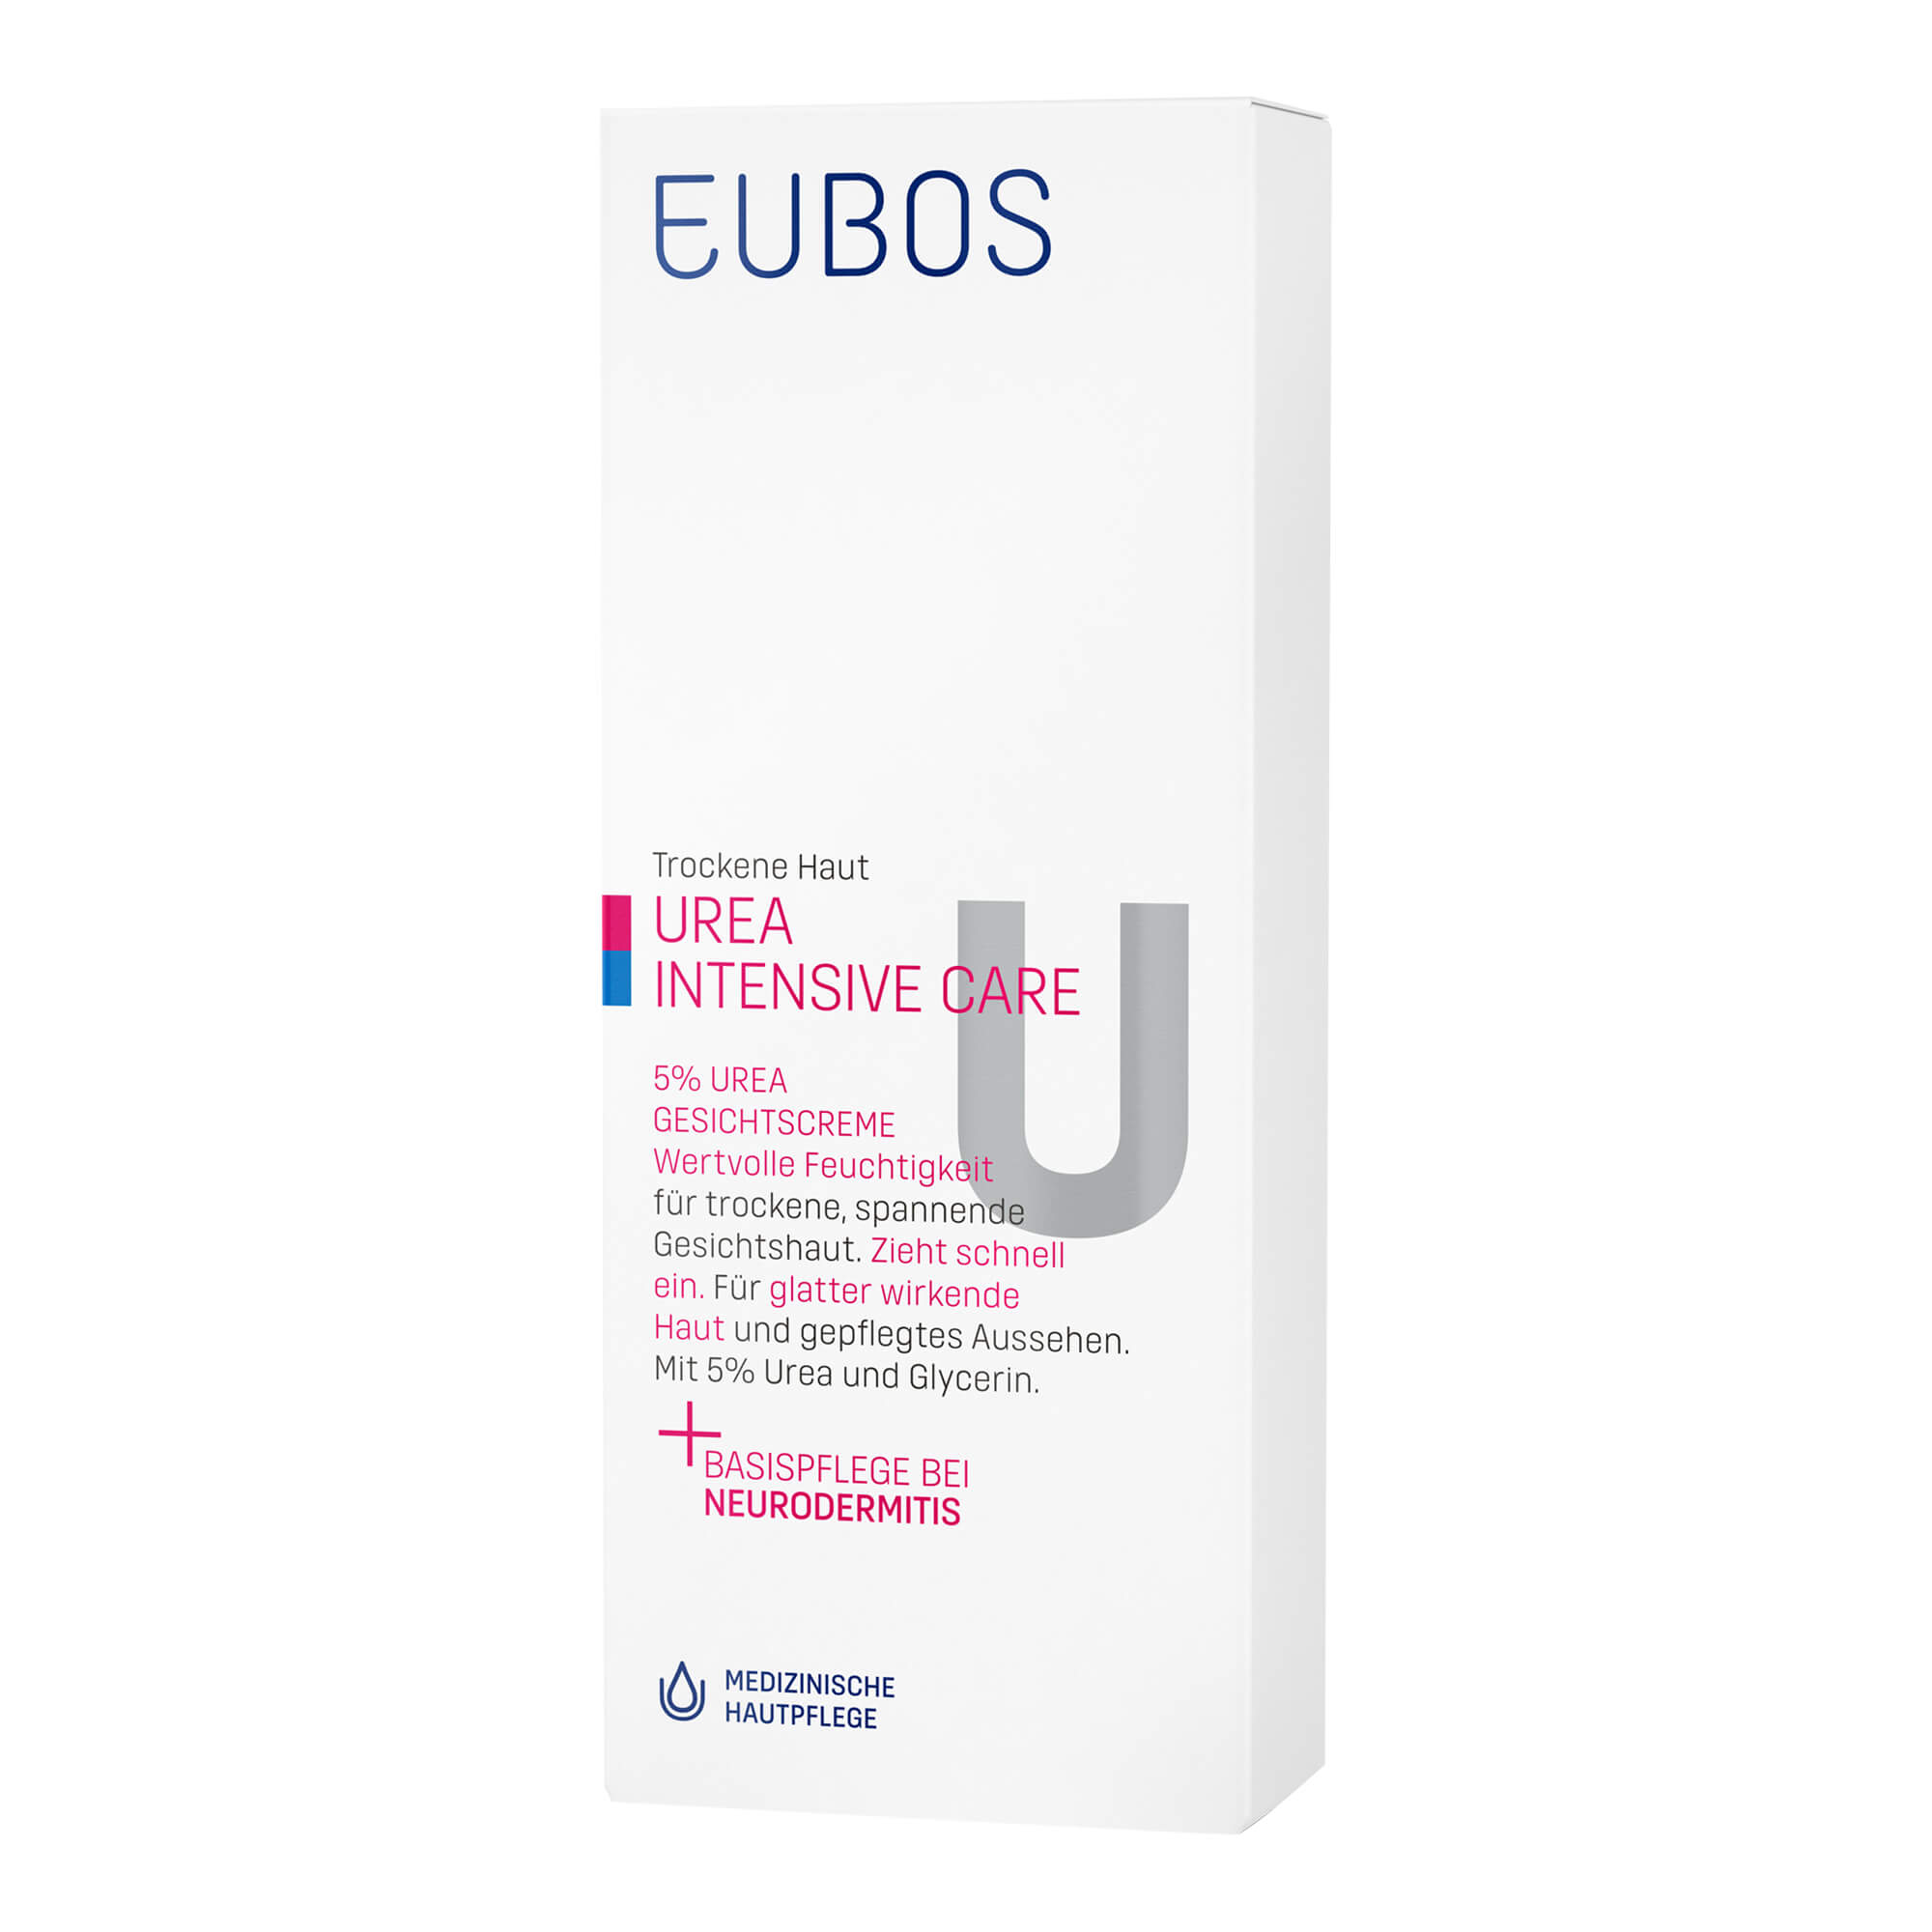 Eubos UREA INTENSIVE CARE Trockene Haut 5% Gesichtscreme